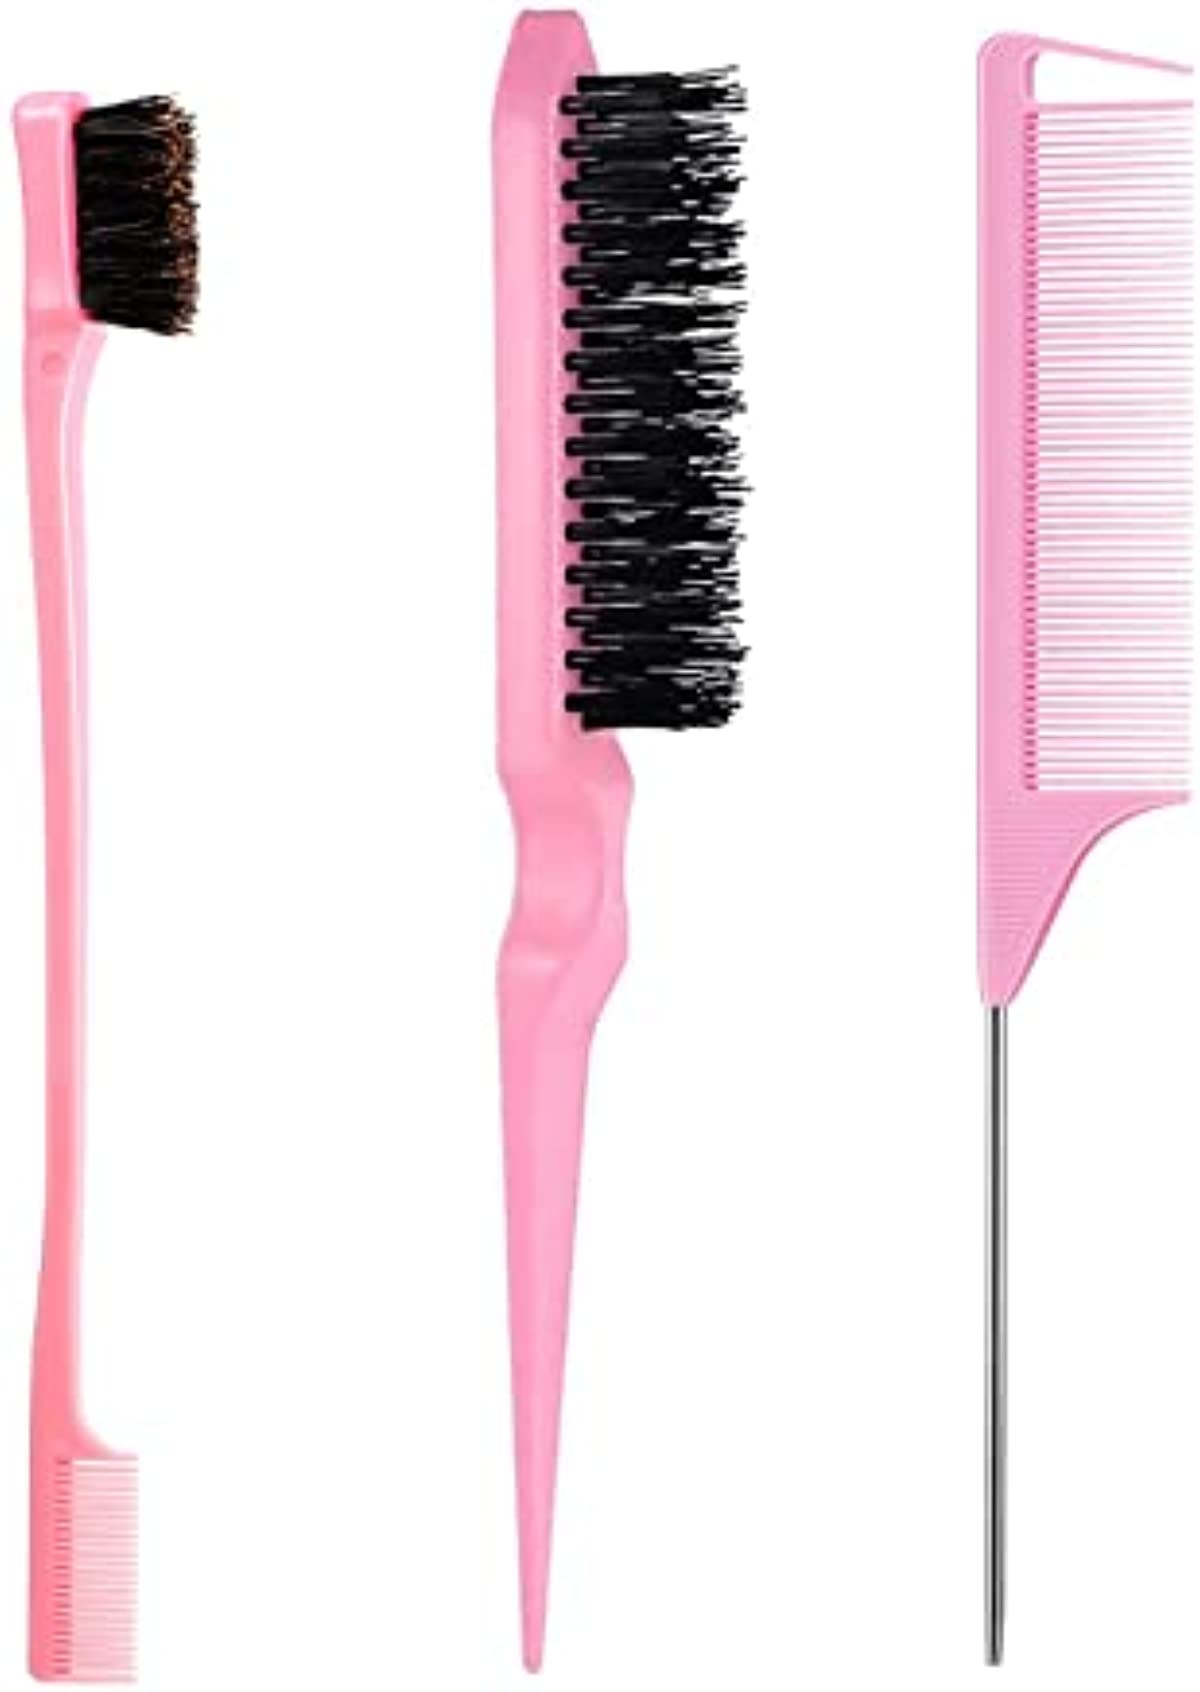 3 Pcs Hair Styling Brush Set with 1 Pcs Edge Brush 1 Pcs Bristle Hair Brush 1 Pcs Rat Tail Comb, Hair Comb Set for Slick Baby Hair and Flyaways - Pink